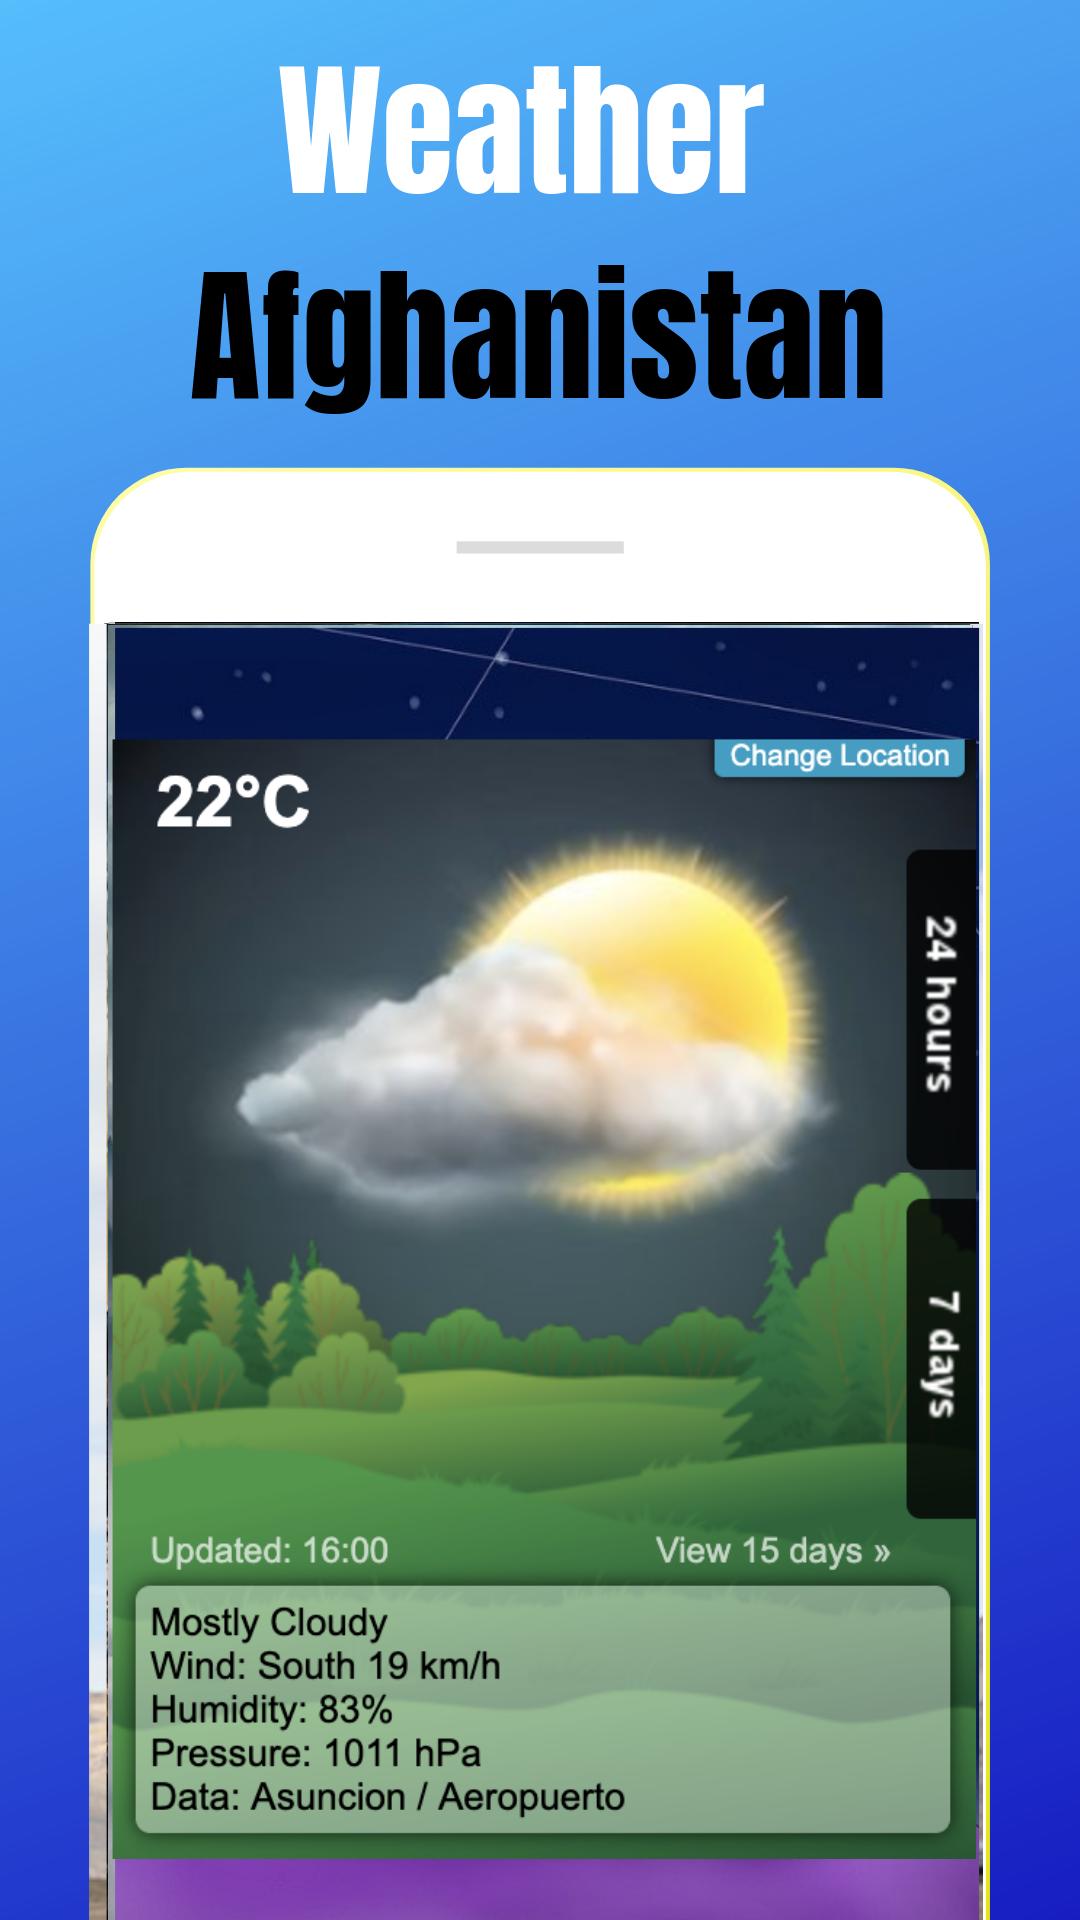 Weather app Android. The weather in Dallas. Argentina waether. Погода в Луис тичардт. Даллас погода